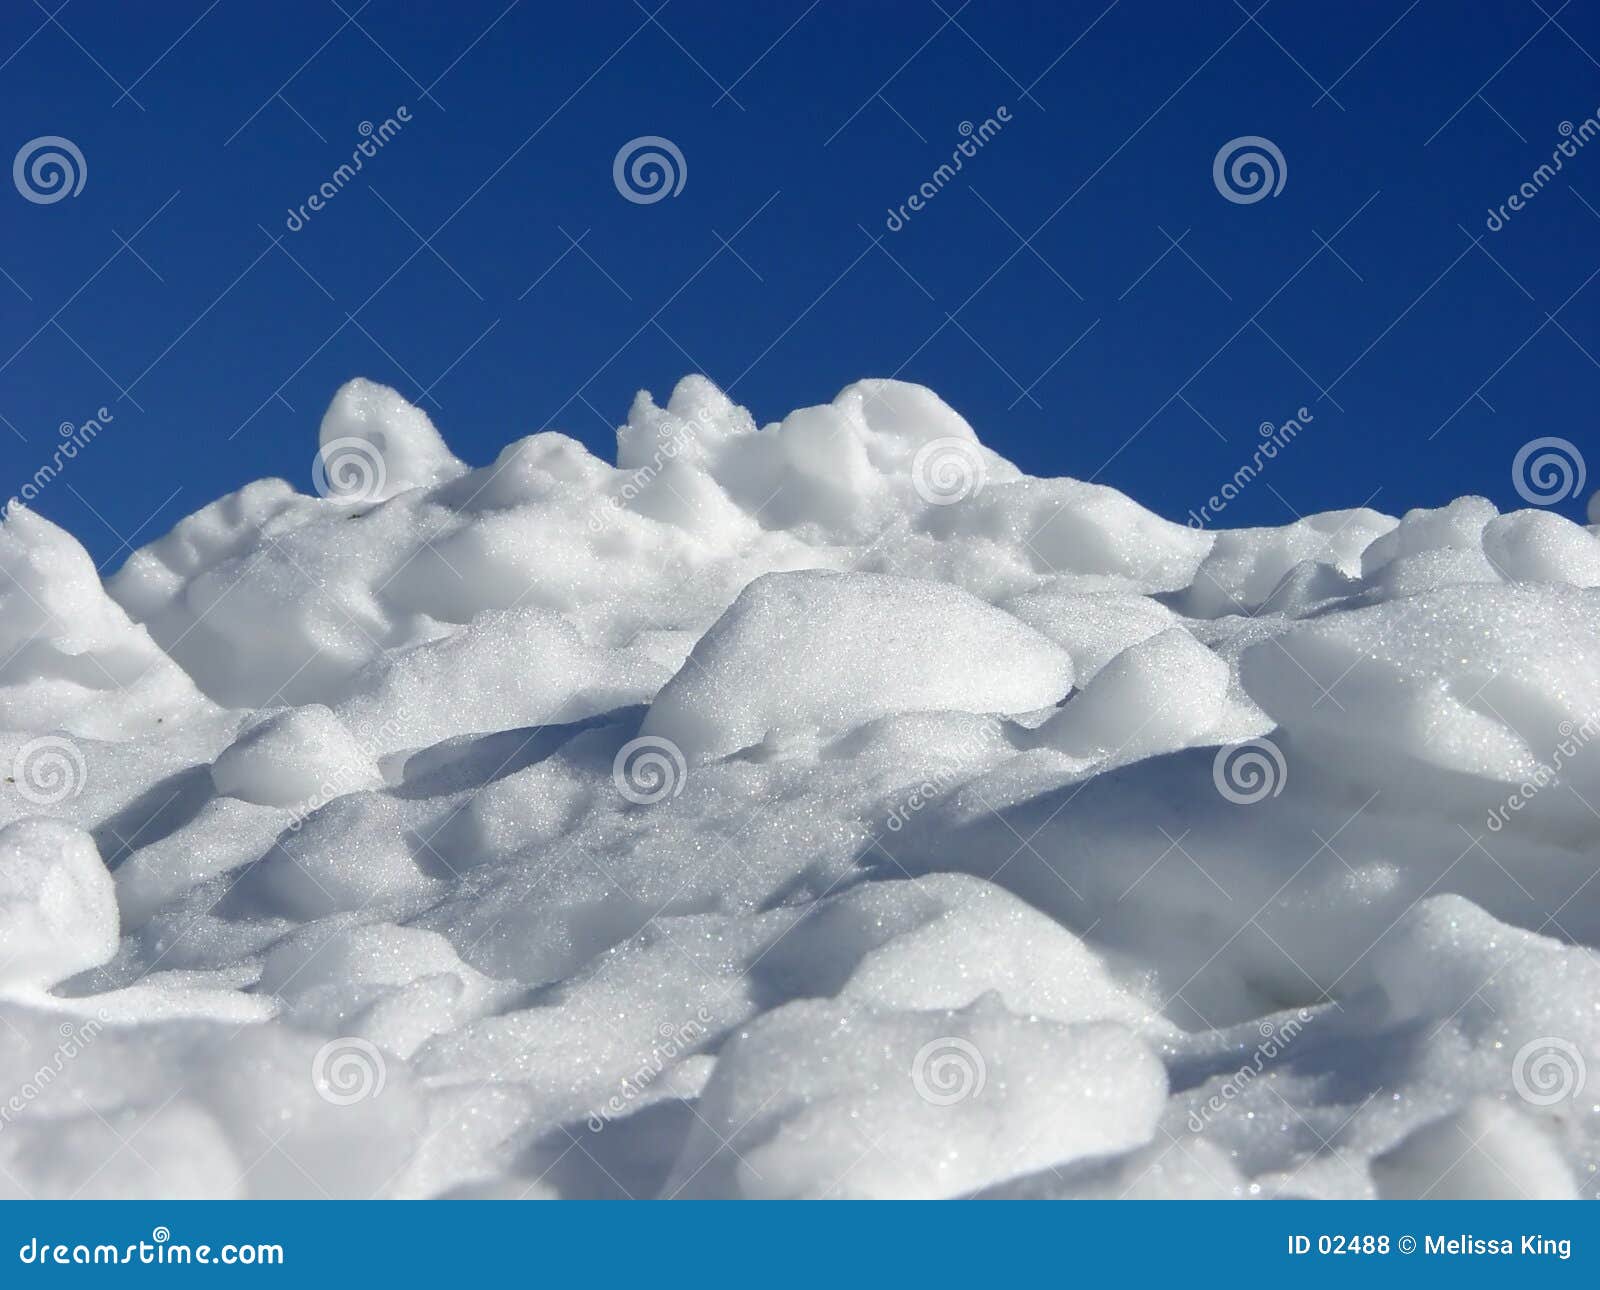 pile of snow